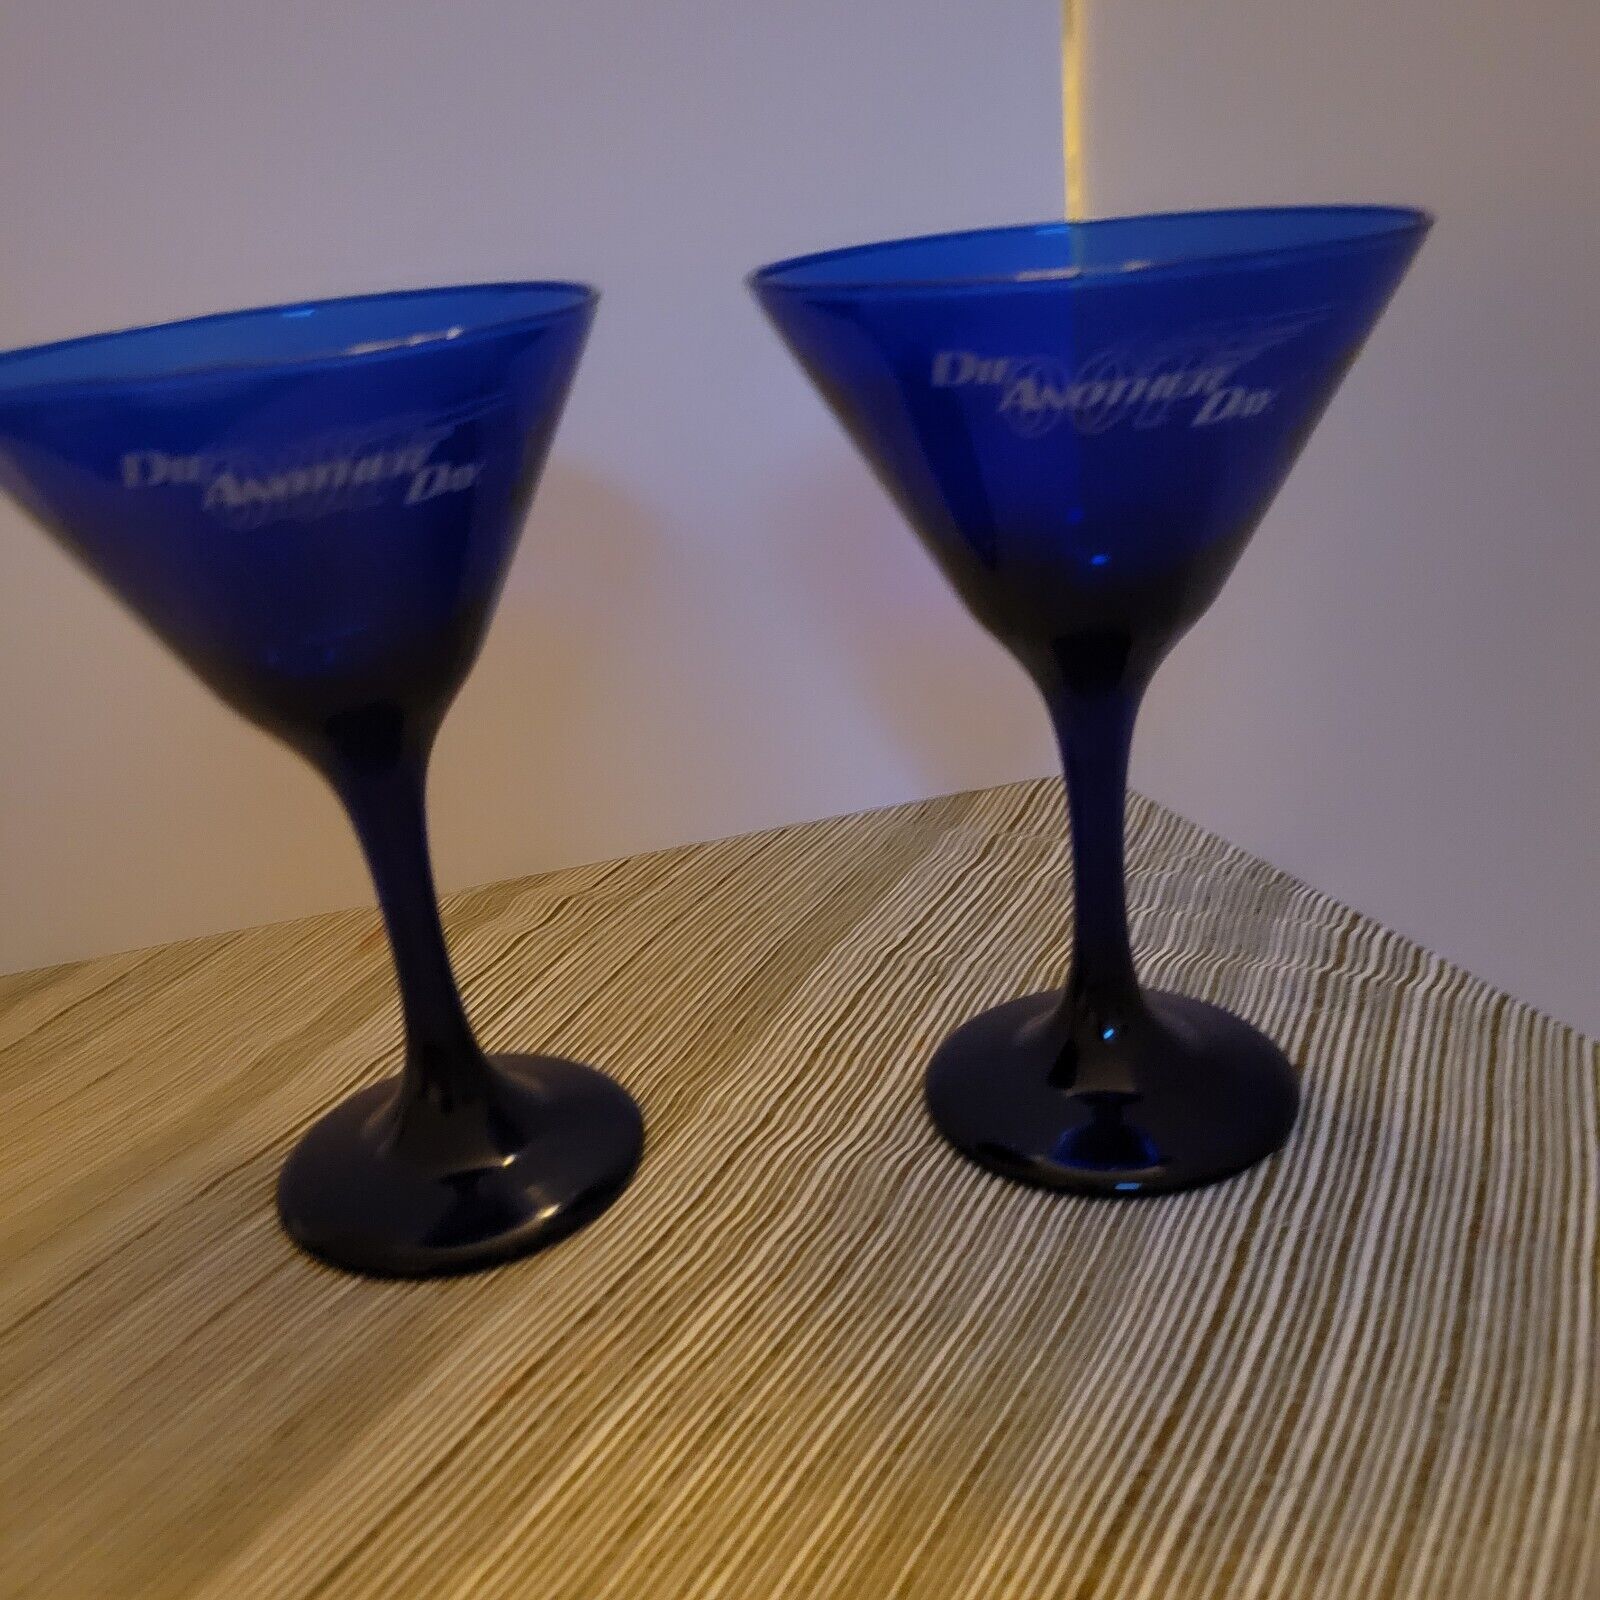 James Bond 007 “Die Another Day” Cobalt Blue Martini Glasses Set Of 2 Rare 